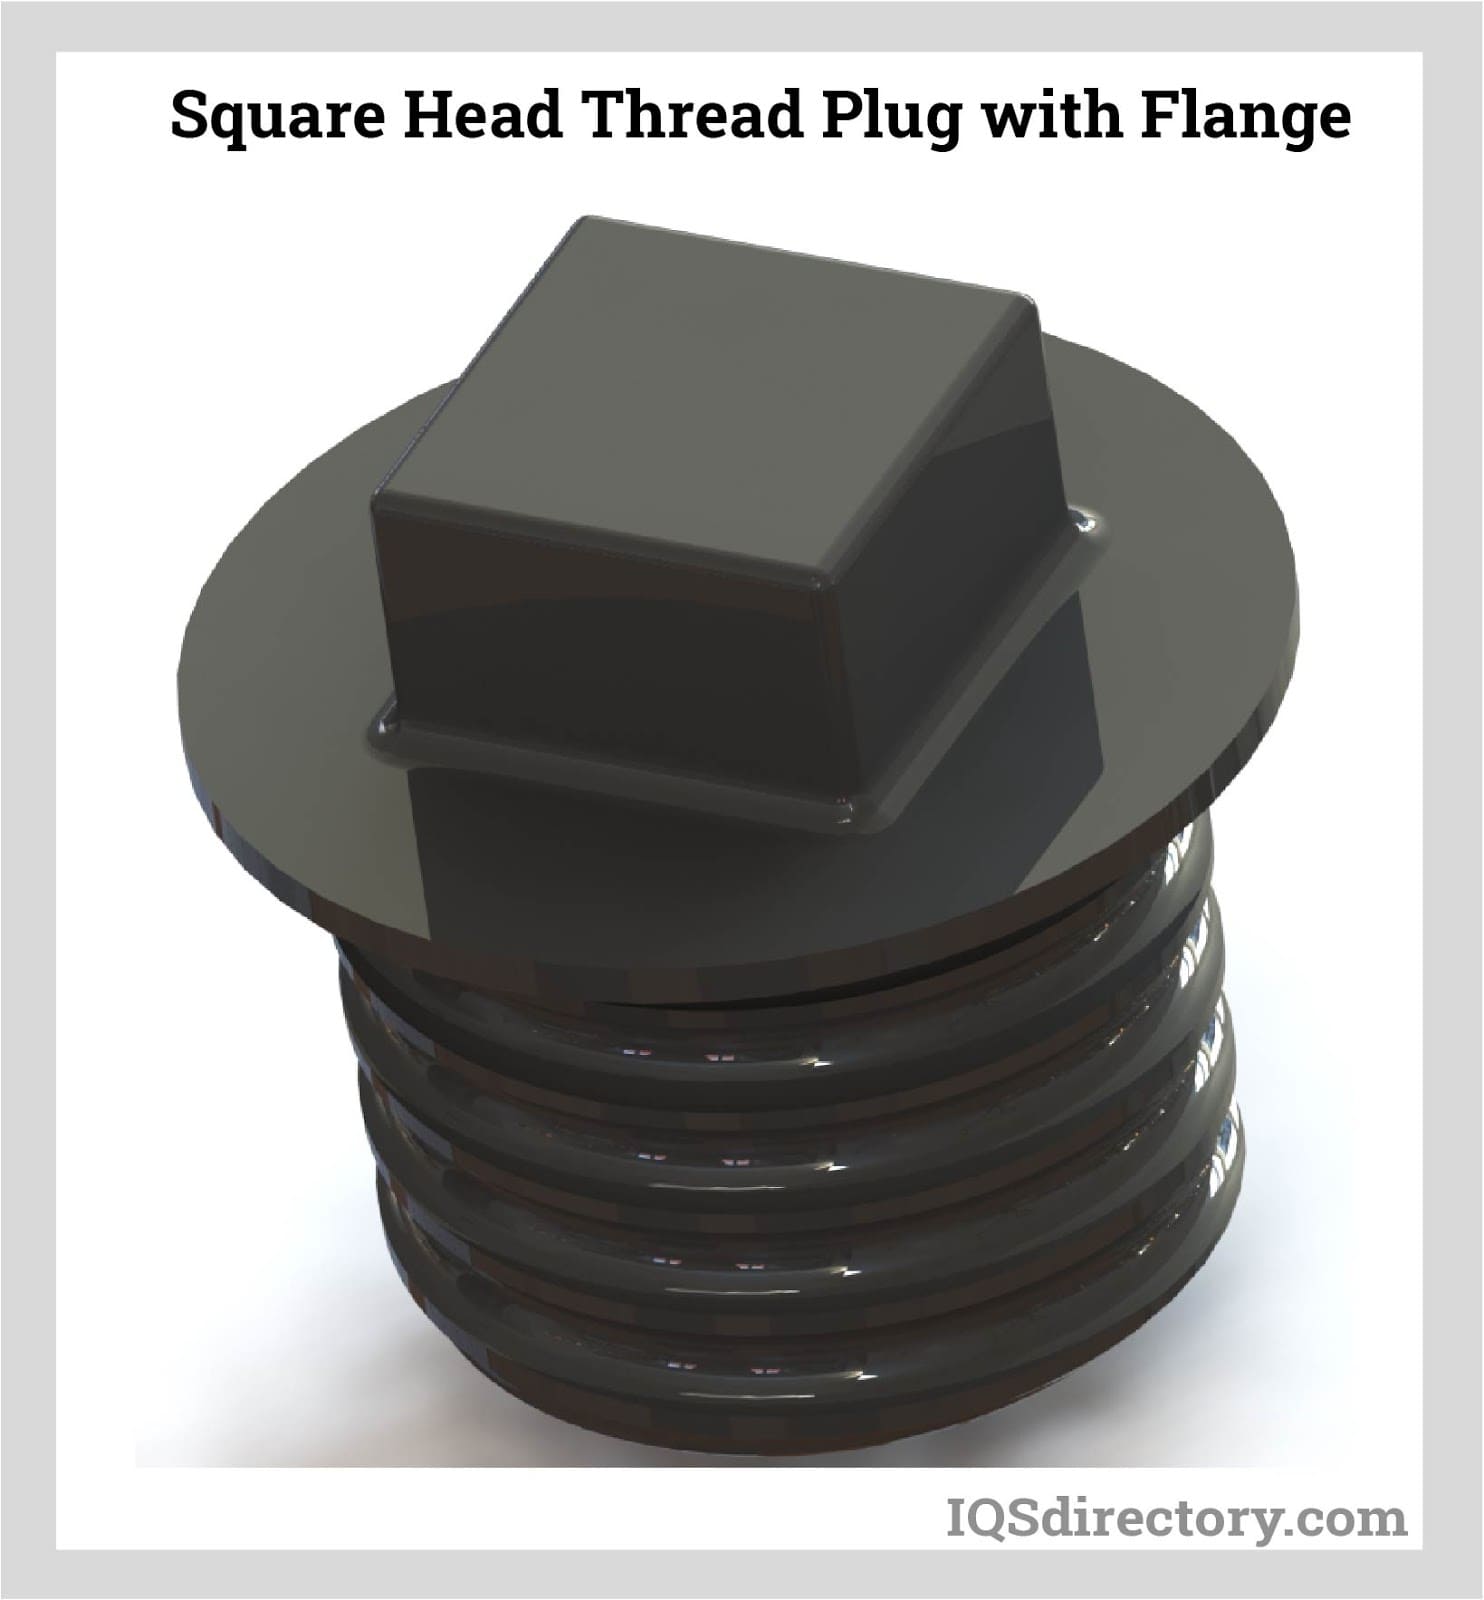 Square Head Thread Plug with Flange